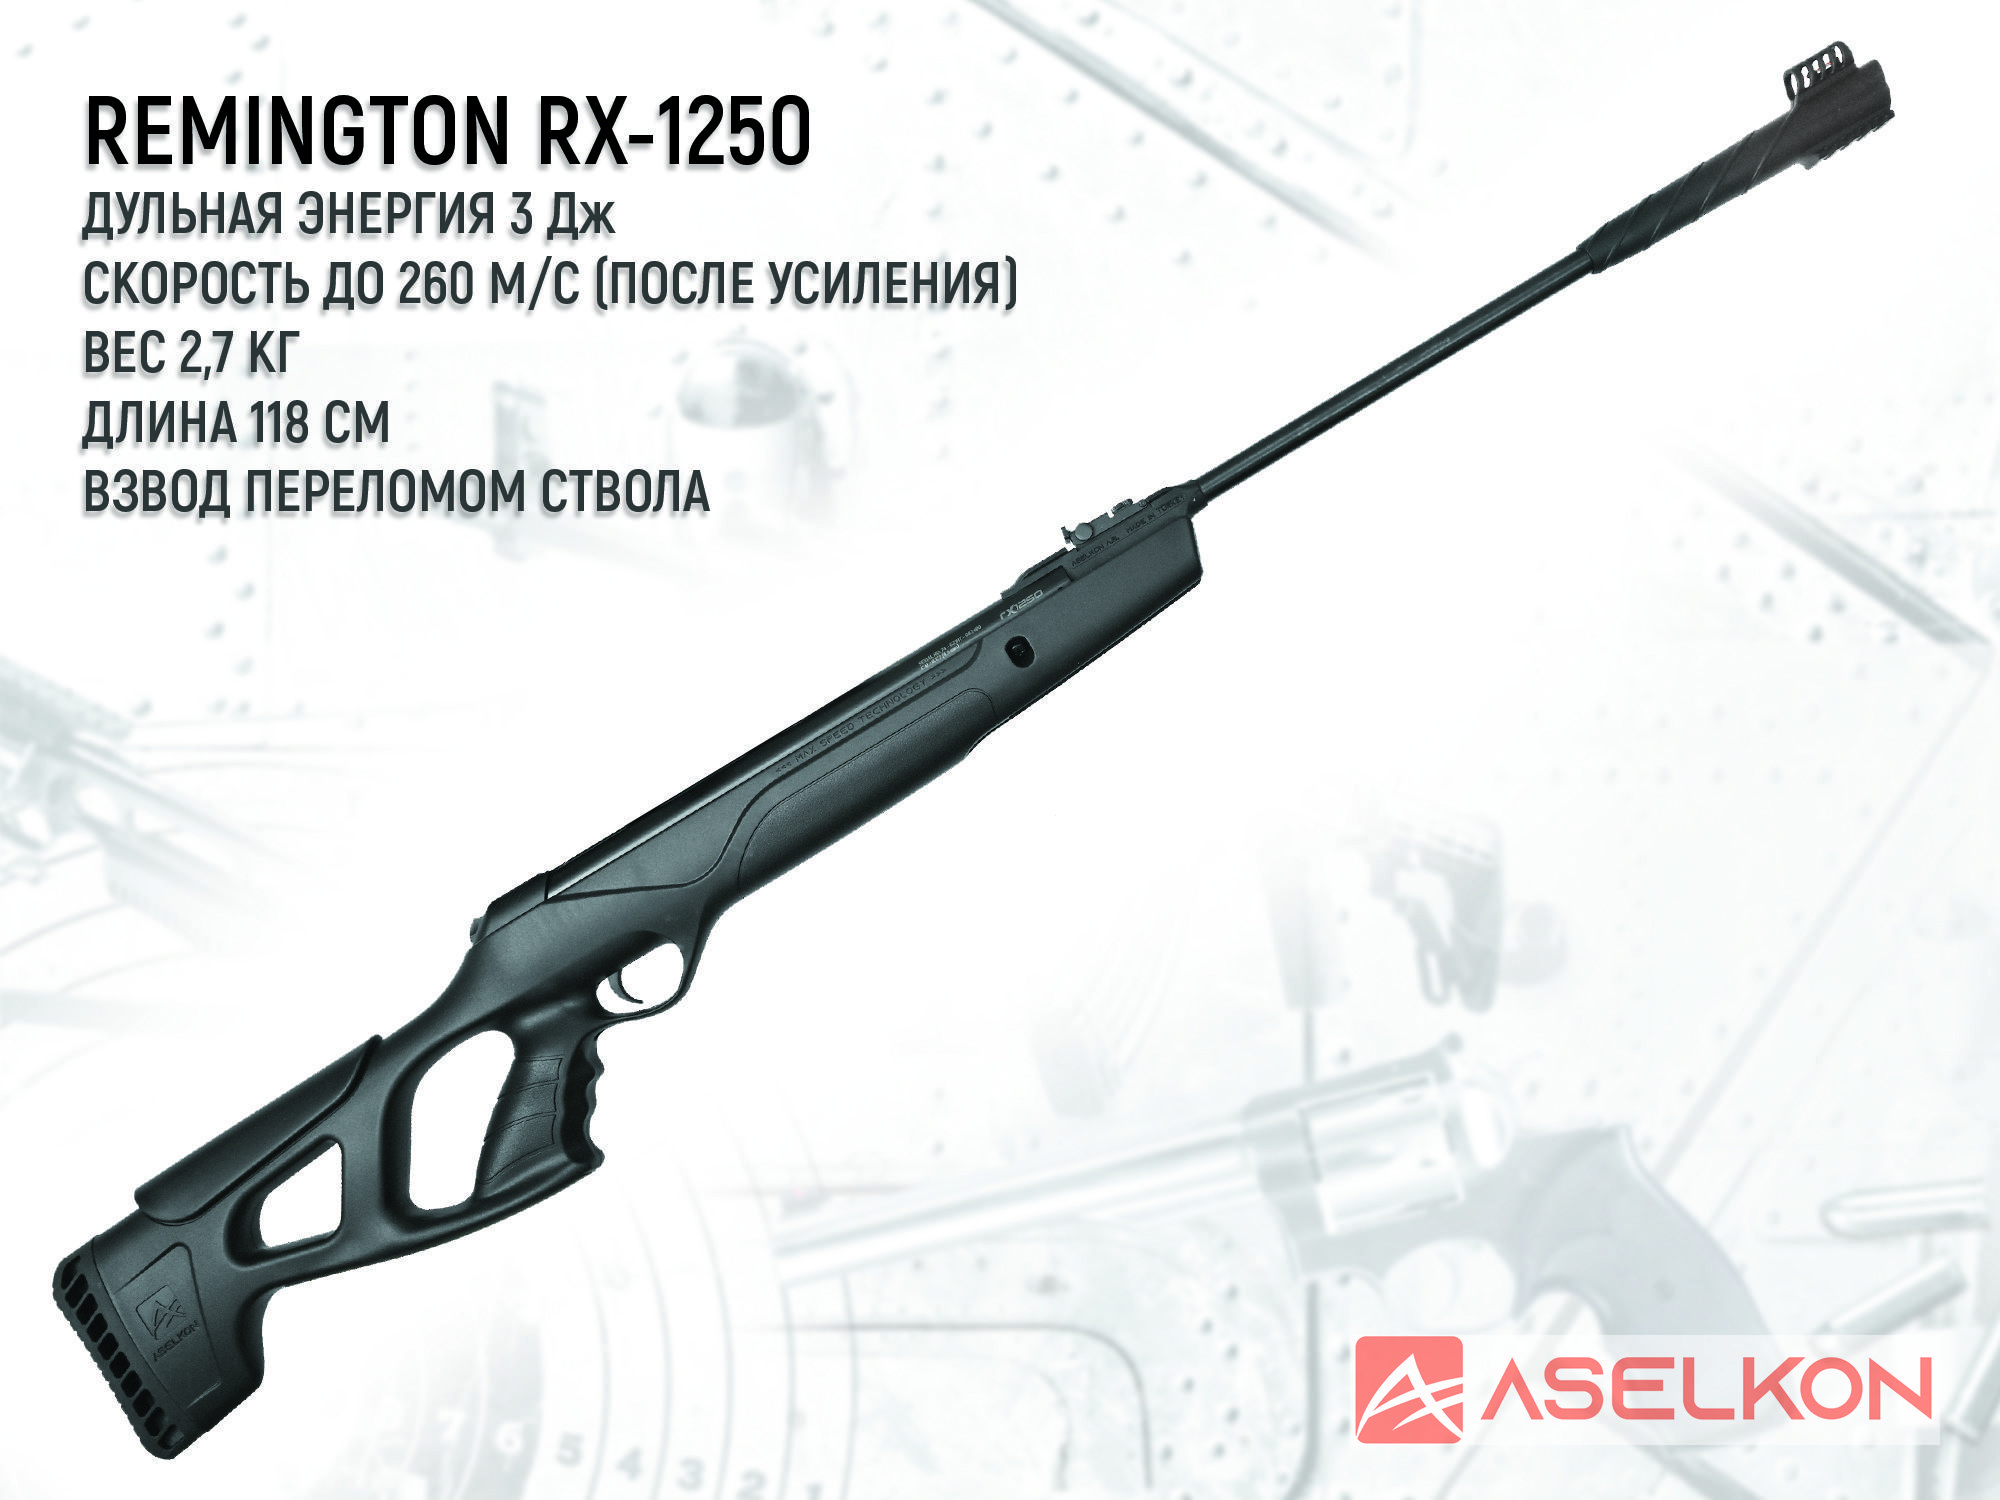 Remington rx1250. Пневматическая винтовка Remington rx1250. Ремингтон пневматическое ружье. Винтовка Remington rx1250 4.5 мм положение предохранителя. Винтовка Remington rx1250 4.5 мм как работает предохранитель.